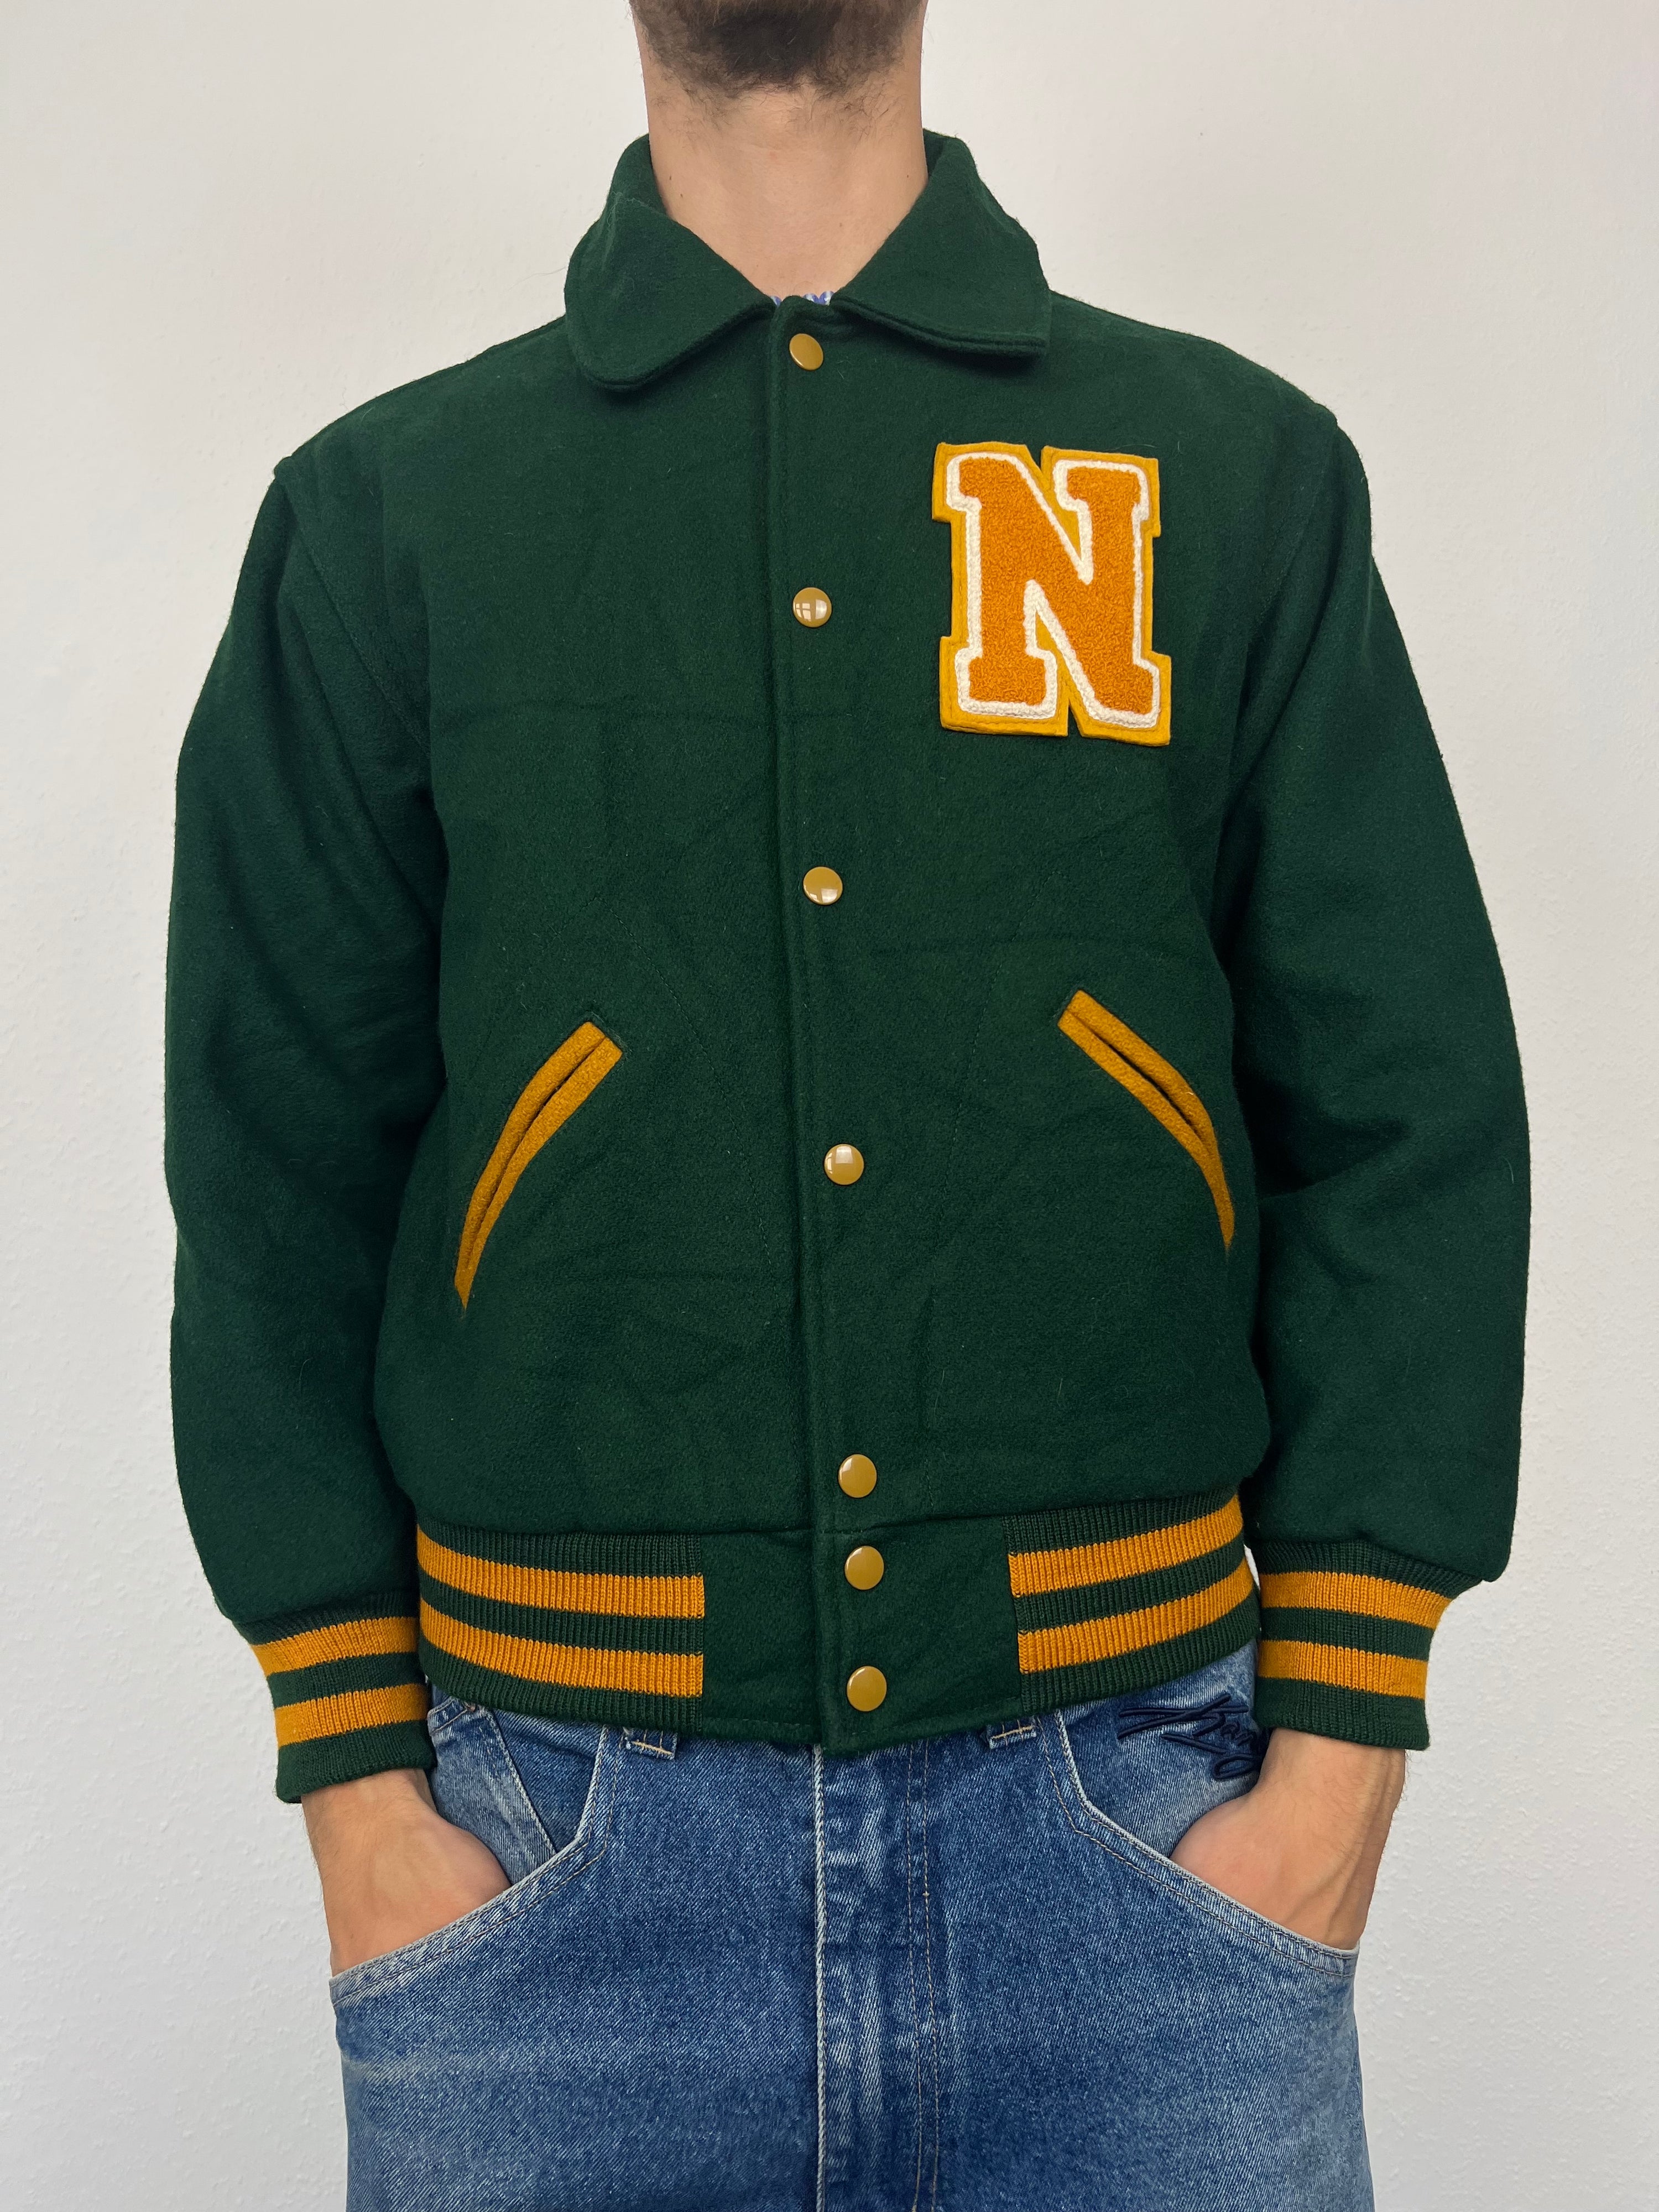 Vintage Varsity 90s College Jacket (M)